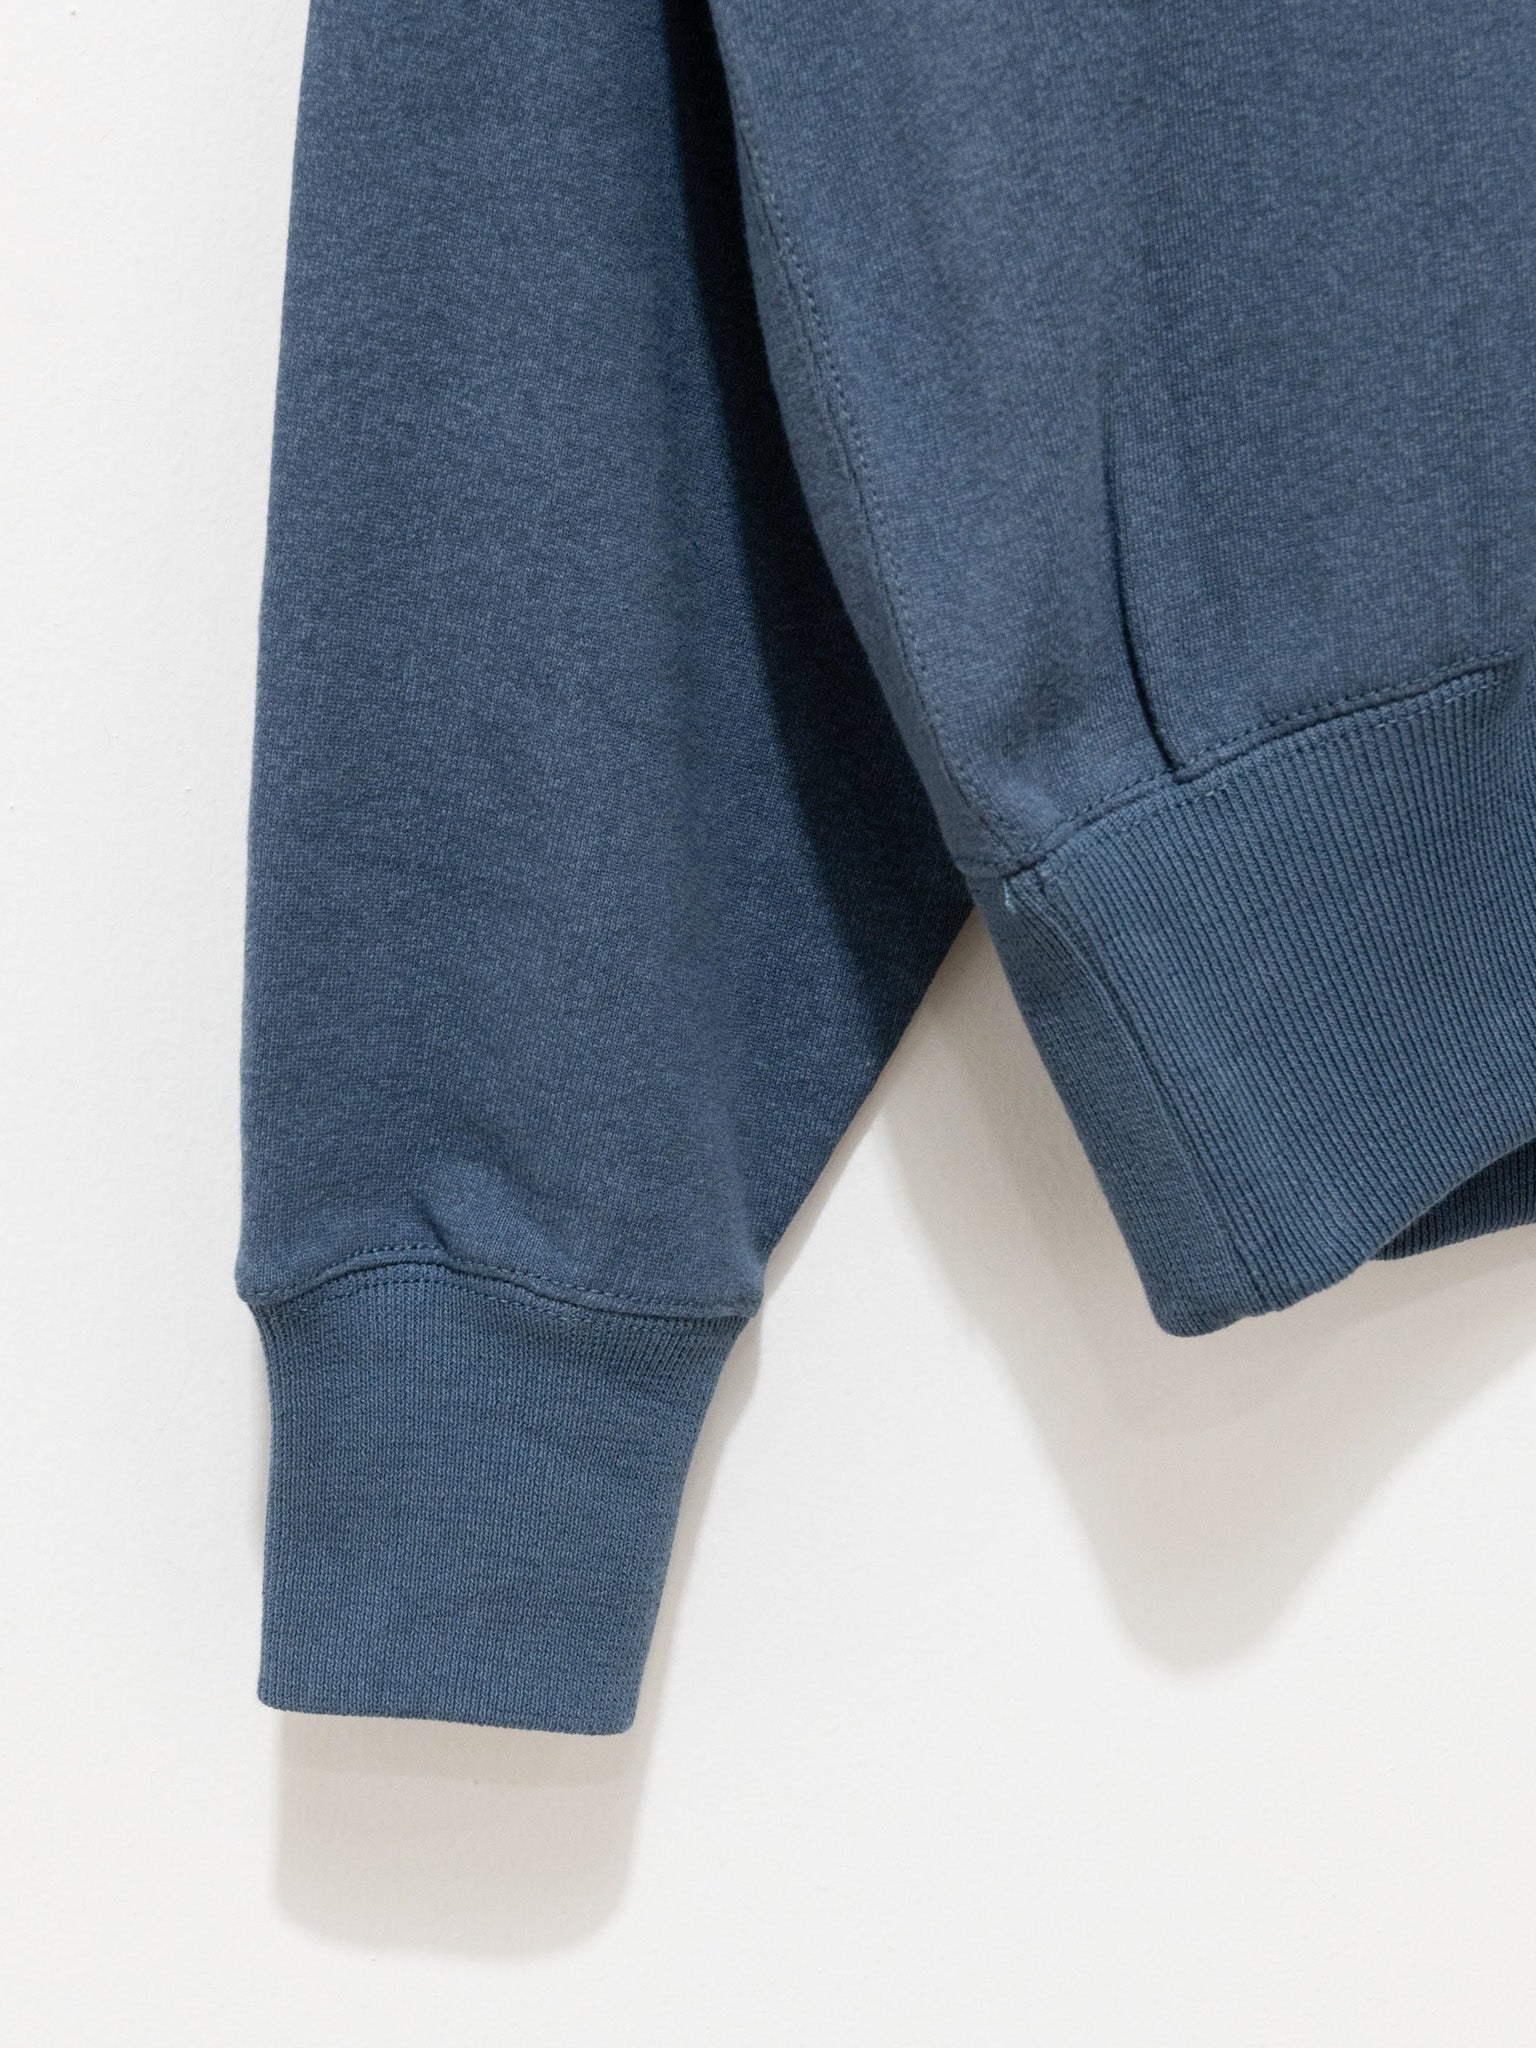 Namu Shop - Unfil Cotton & Paper Terry Sweatshirt - Graphite Blue